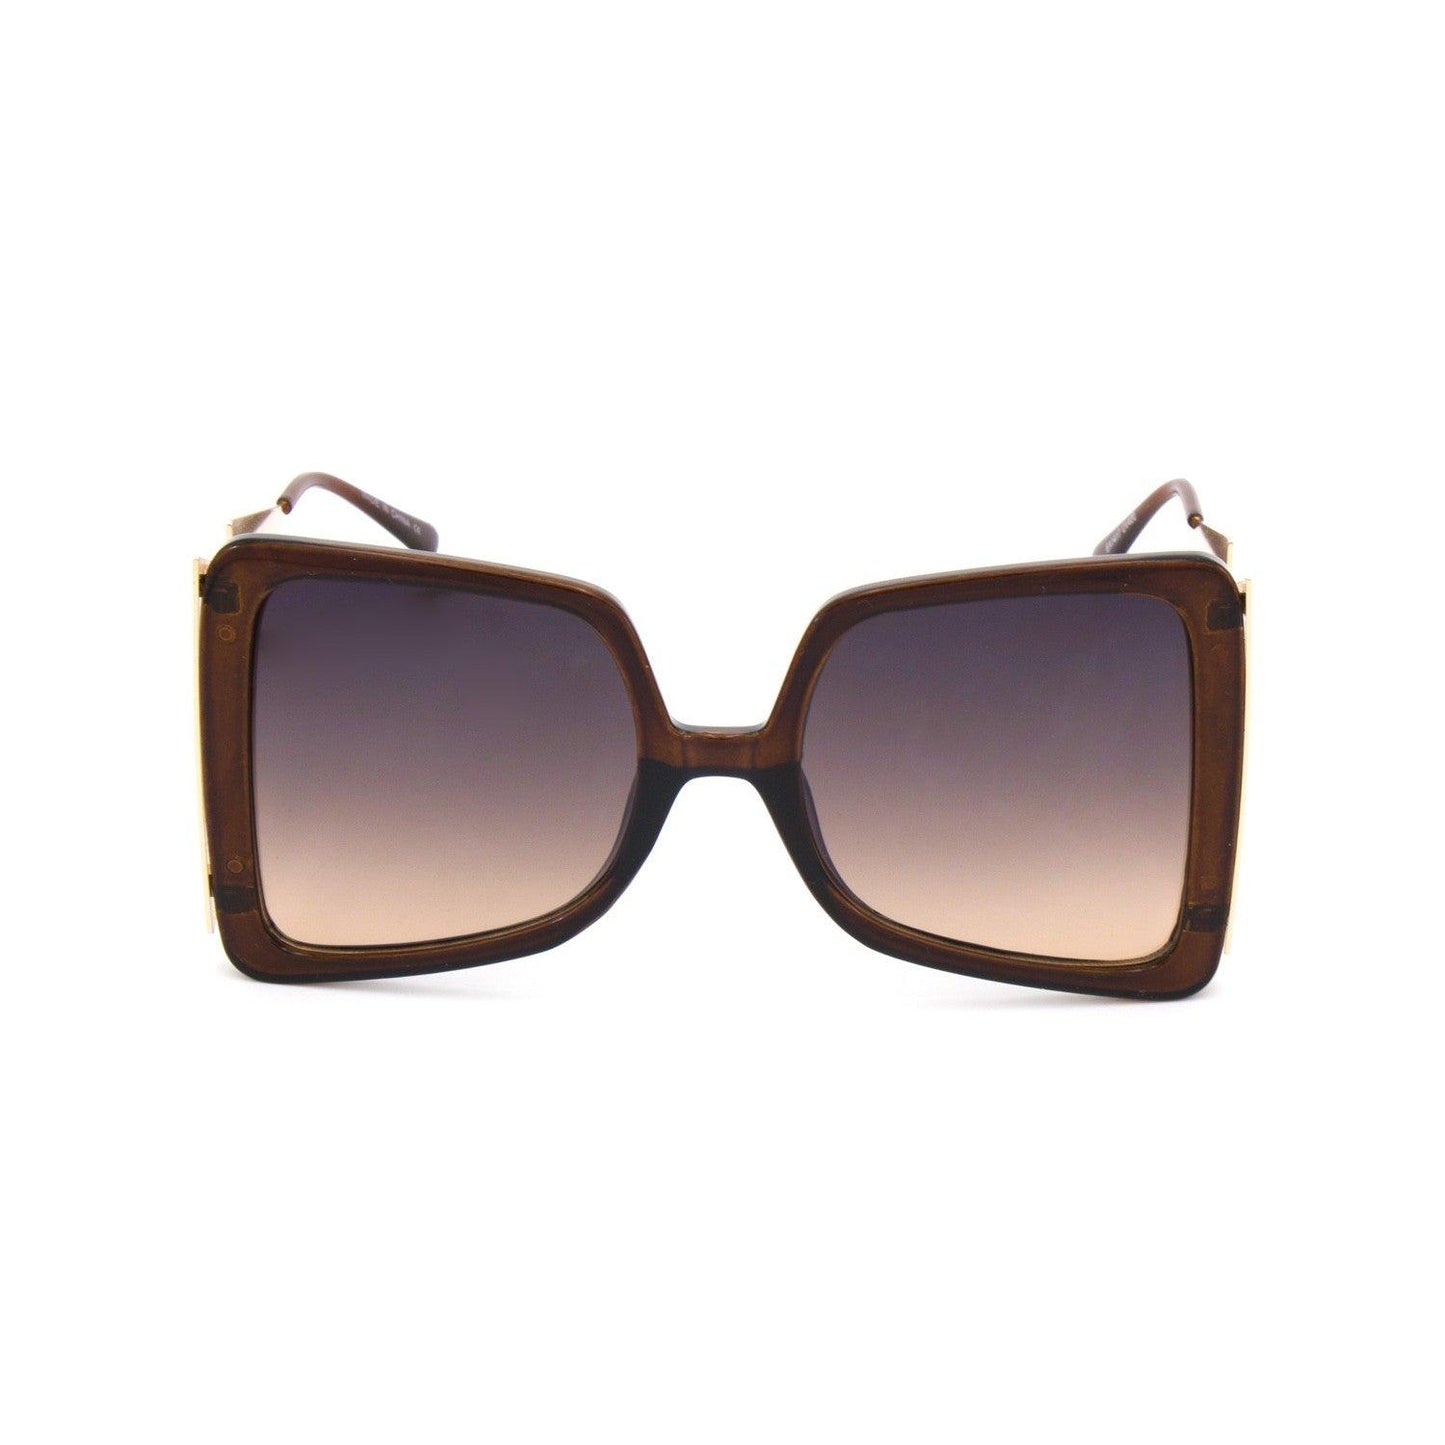 "Lightening" Oversize Square Metal Frames - Weekend Shade Sunglasses